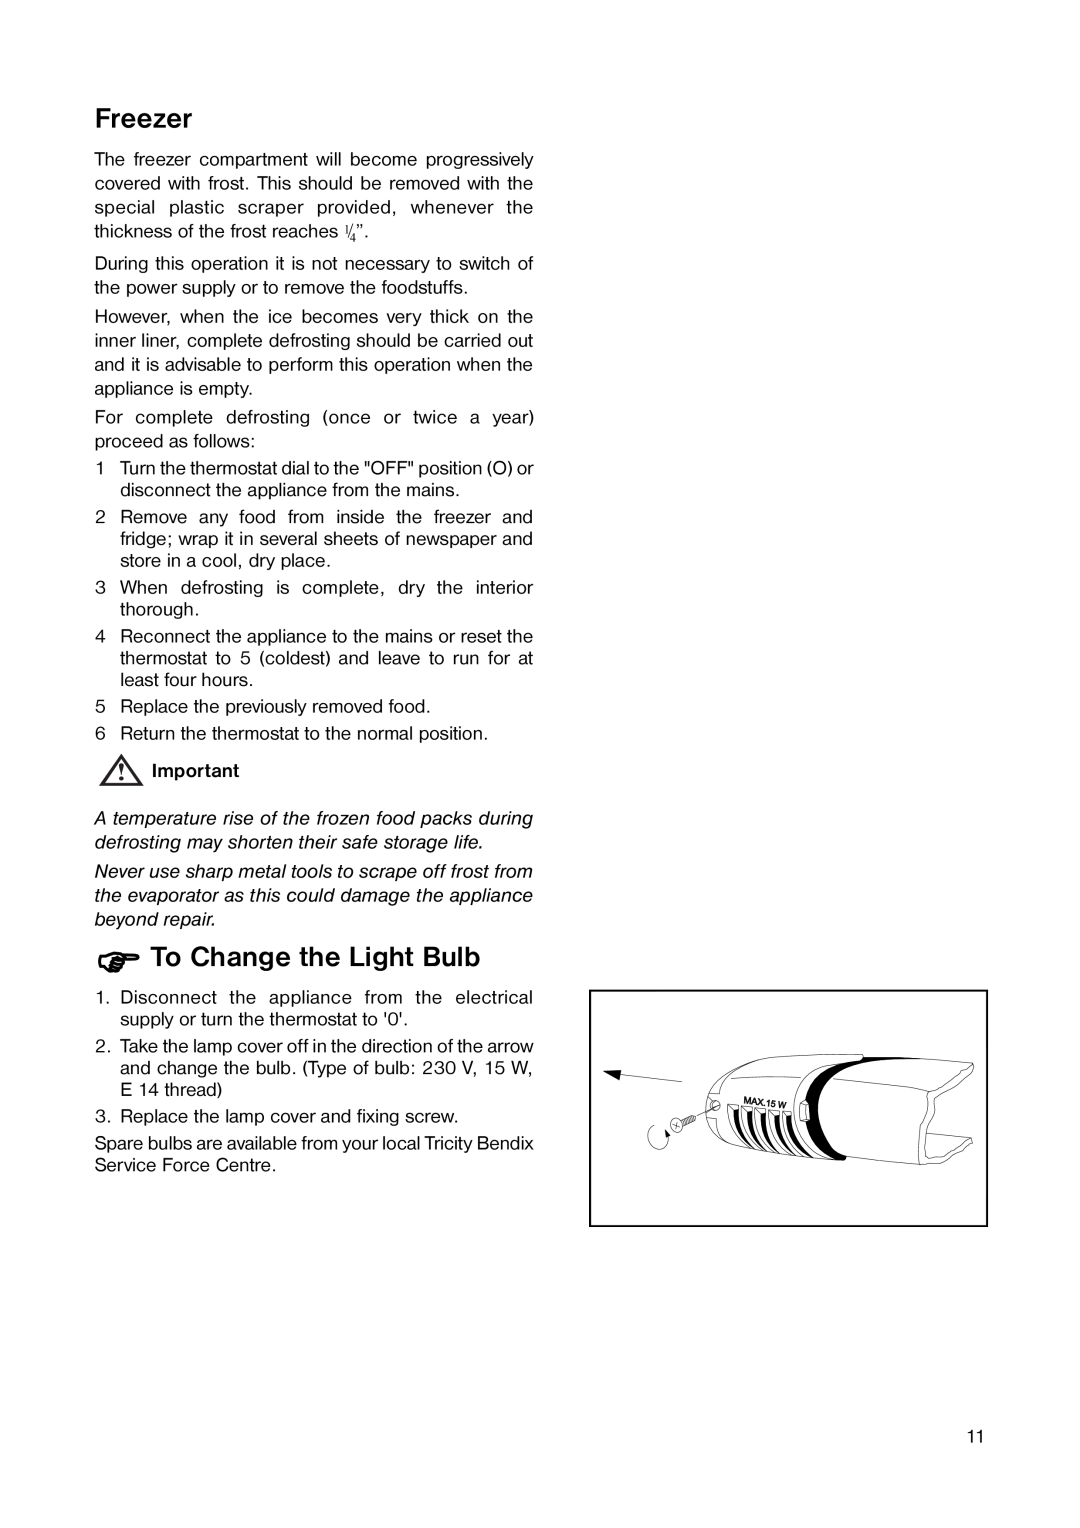 Tricity Bendix TB 116 FF, TB 090 FF installation instructions Freezer, Φ To Change the Light Bulb 